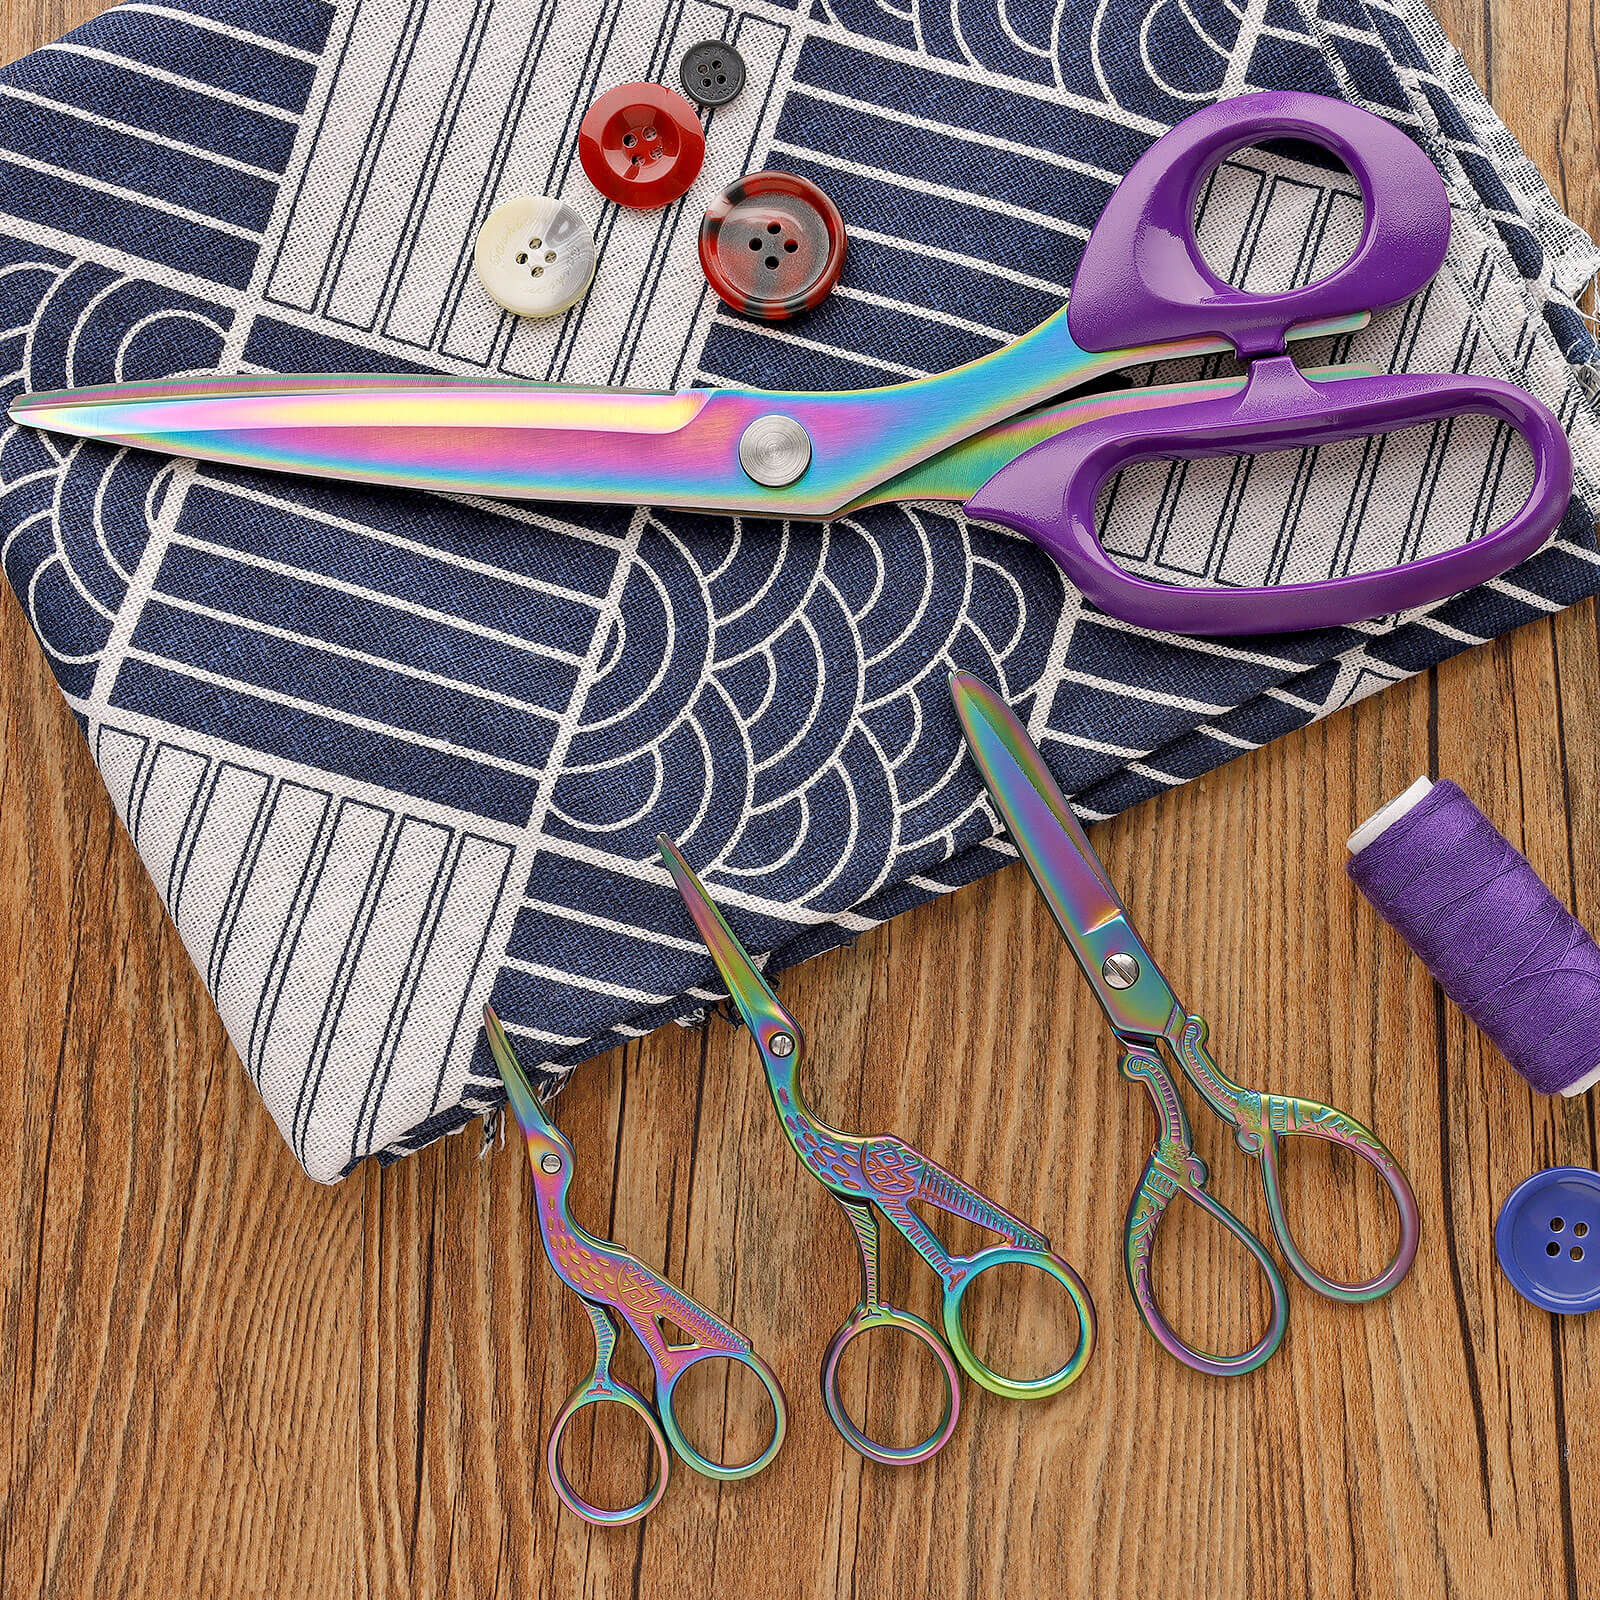 Asdirne Fabric Scissors & Embroidery Scissors Set